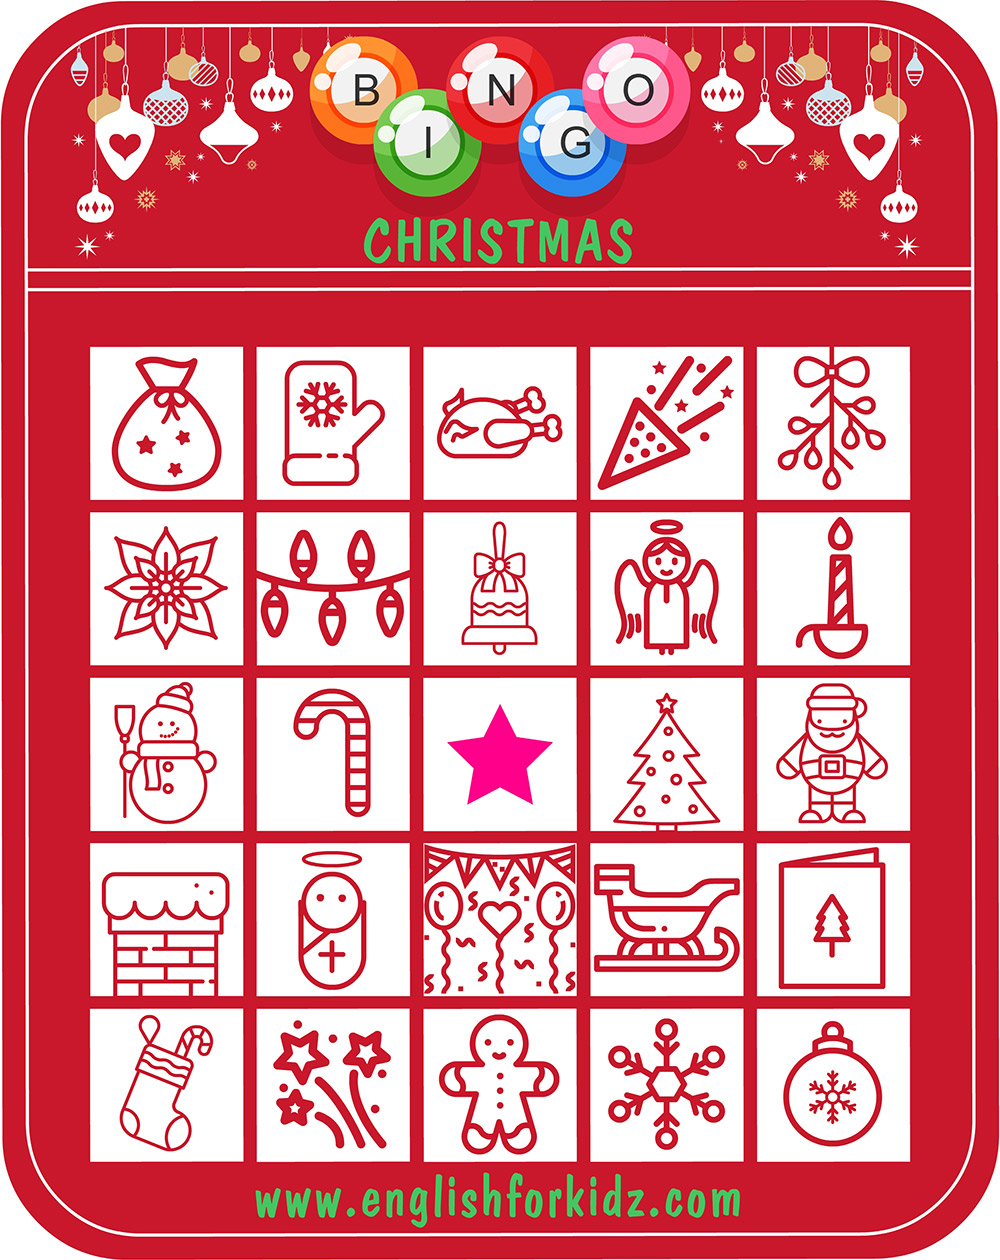 English for Kids Step by Step: ESL Christmas Bingo Game